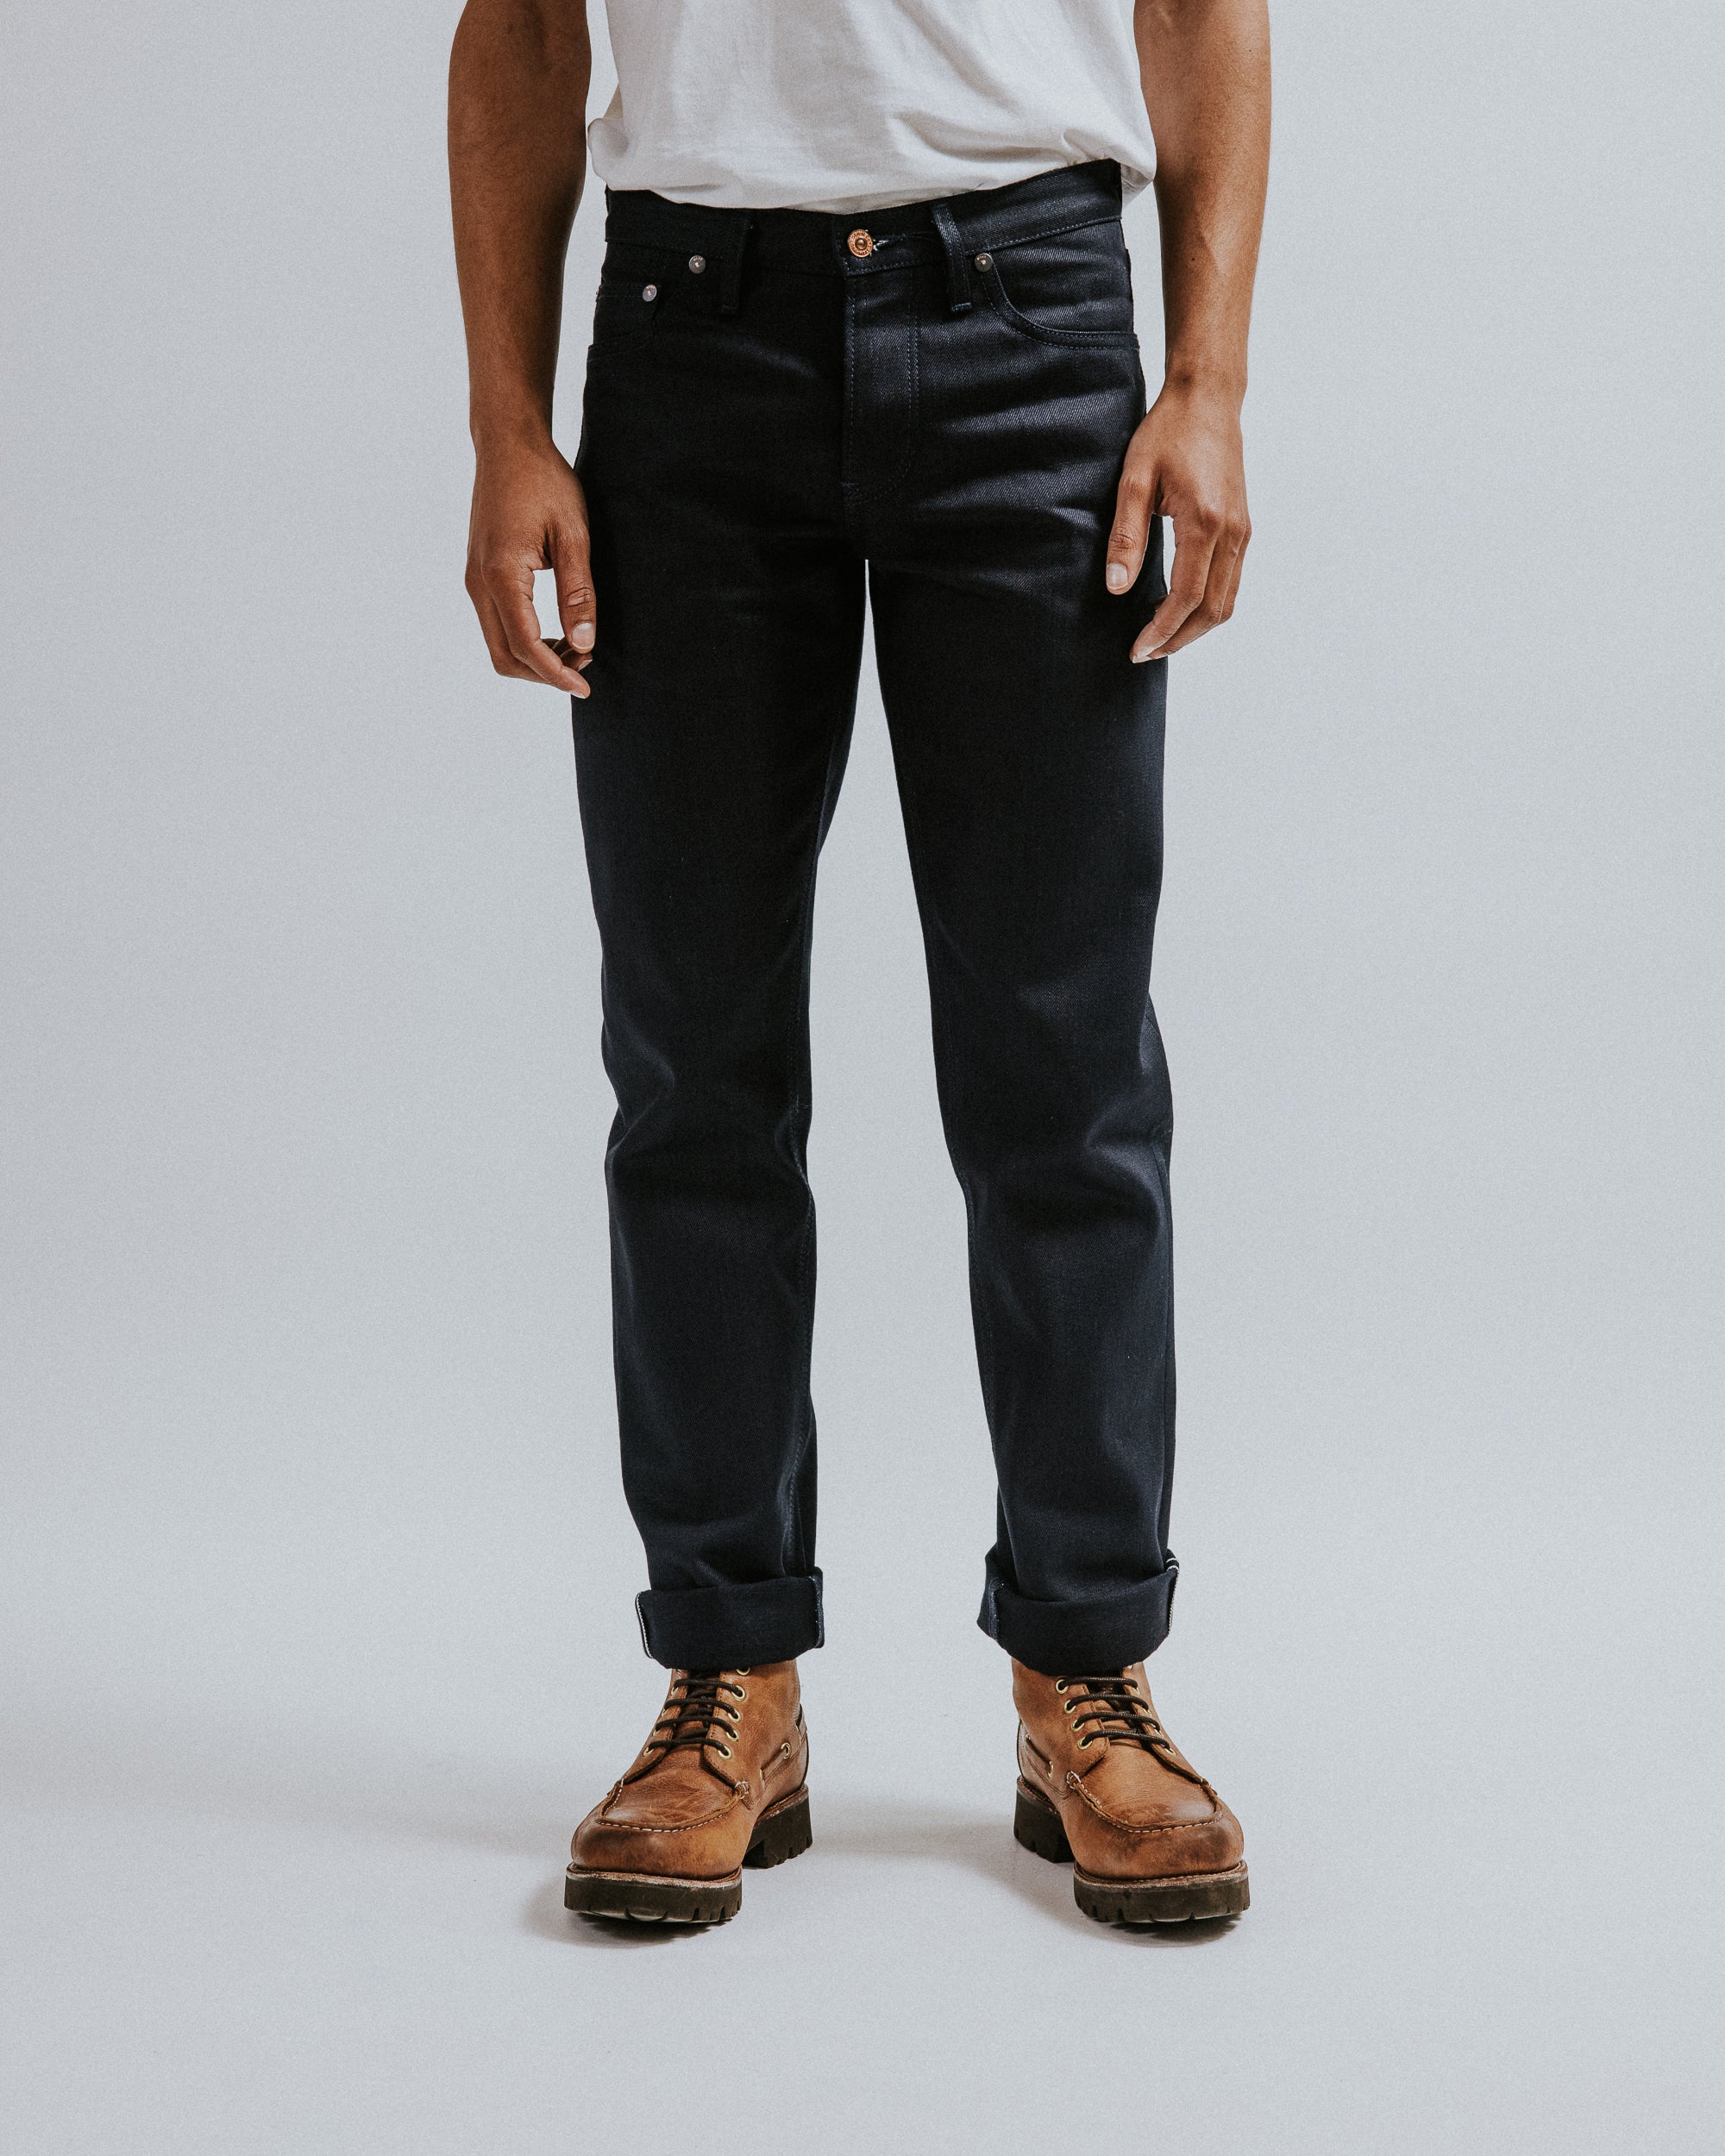 Best jeans for men: The Hiut denim company | British GQ | British GQ